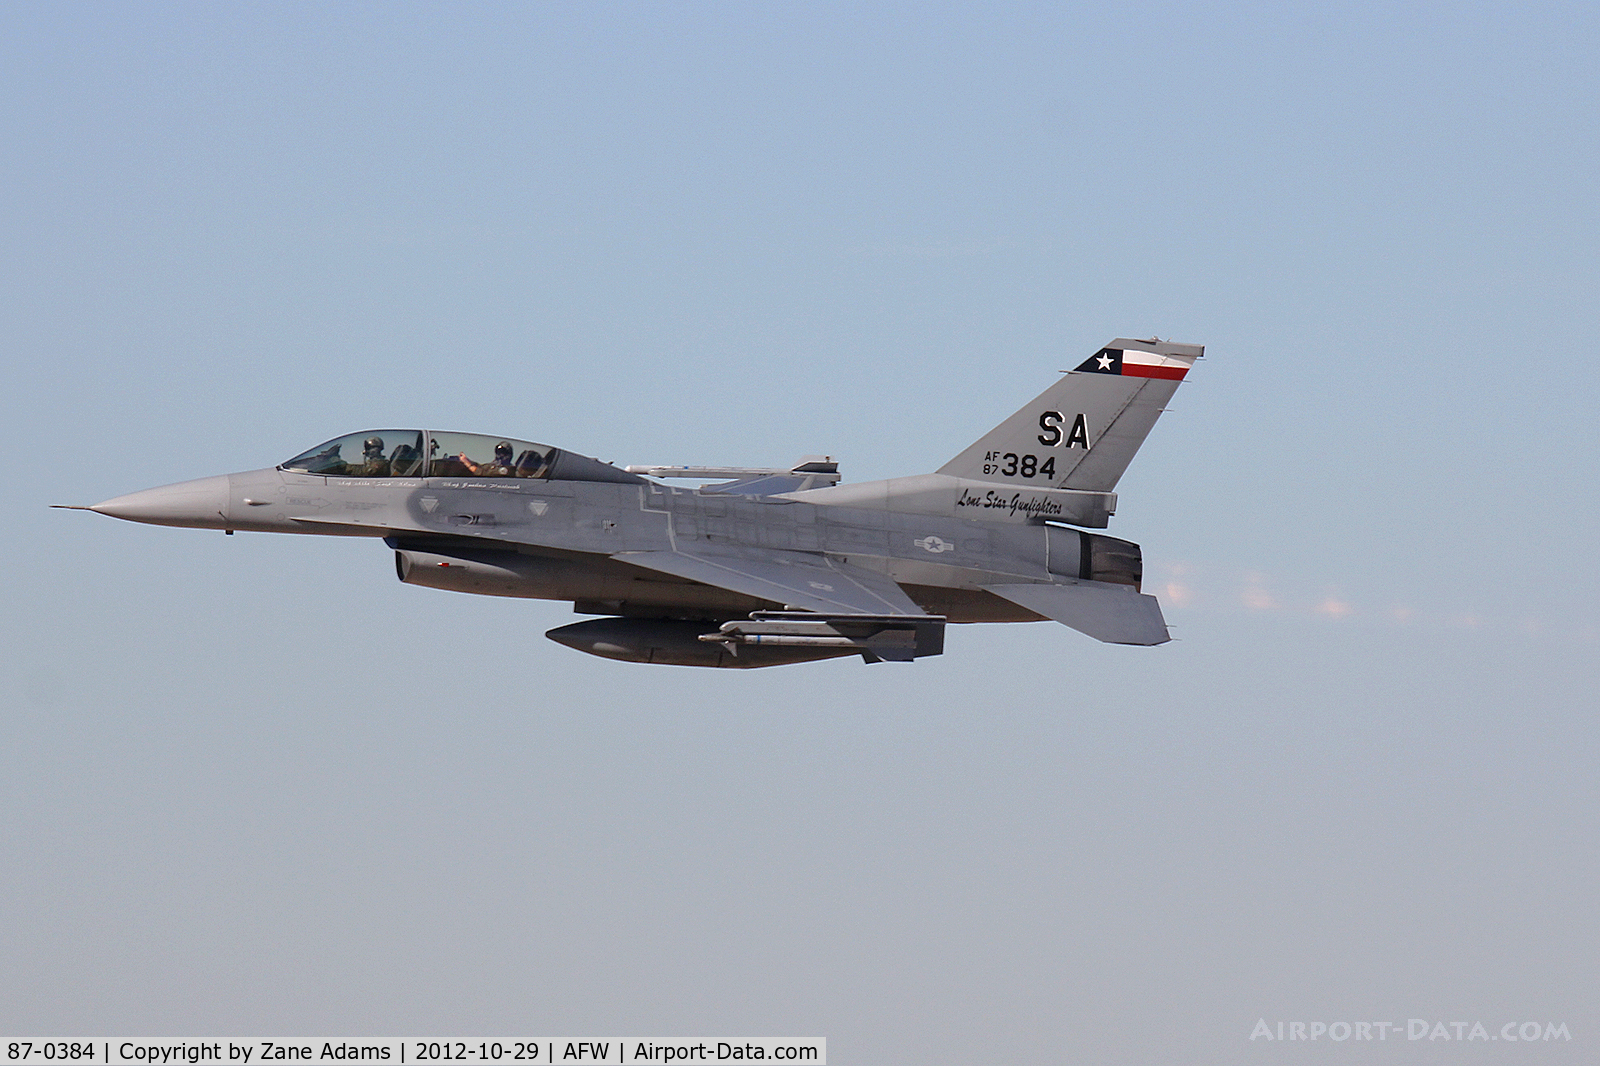 87-0384, 1987 General Dynamics F-16D Fighting Falcon C/N 5D-78, Charles Coates/LAT